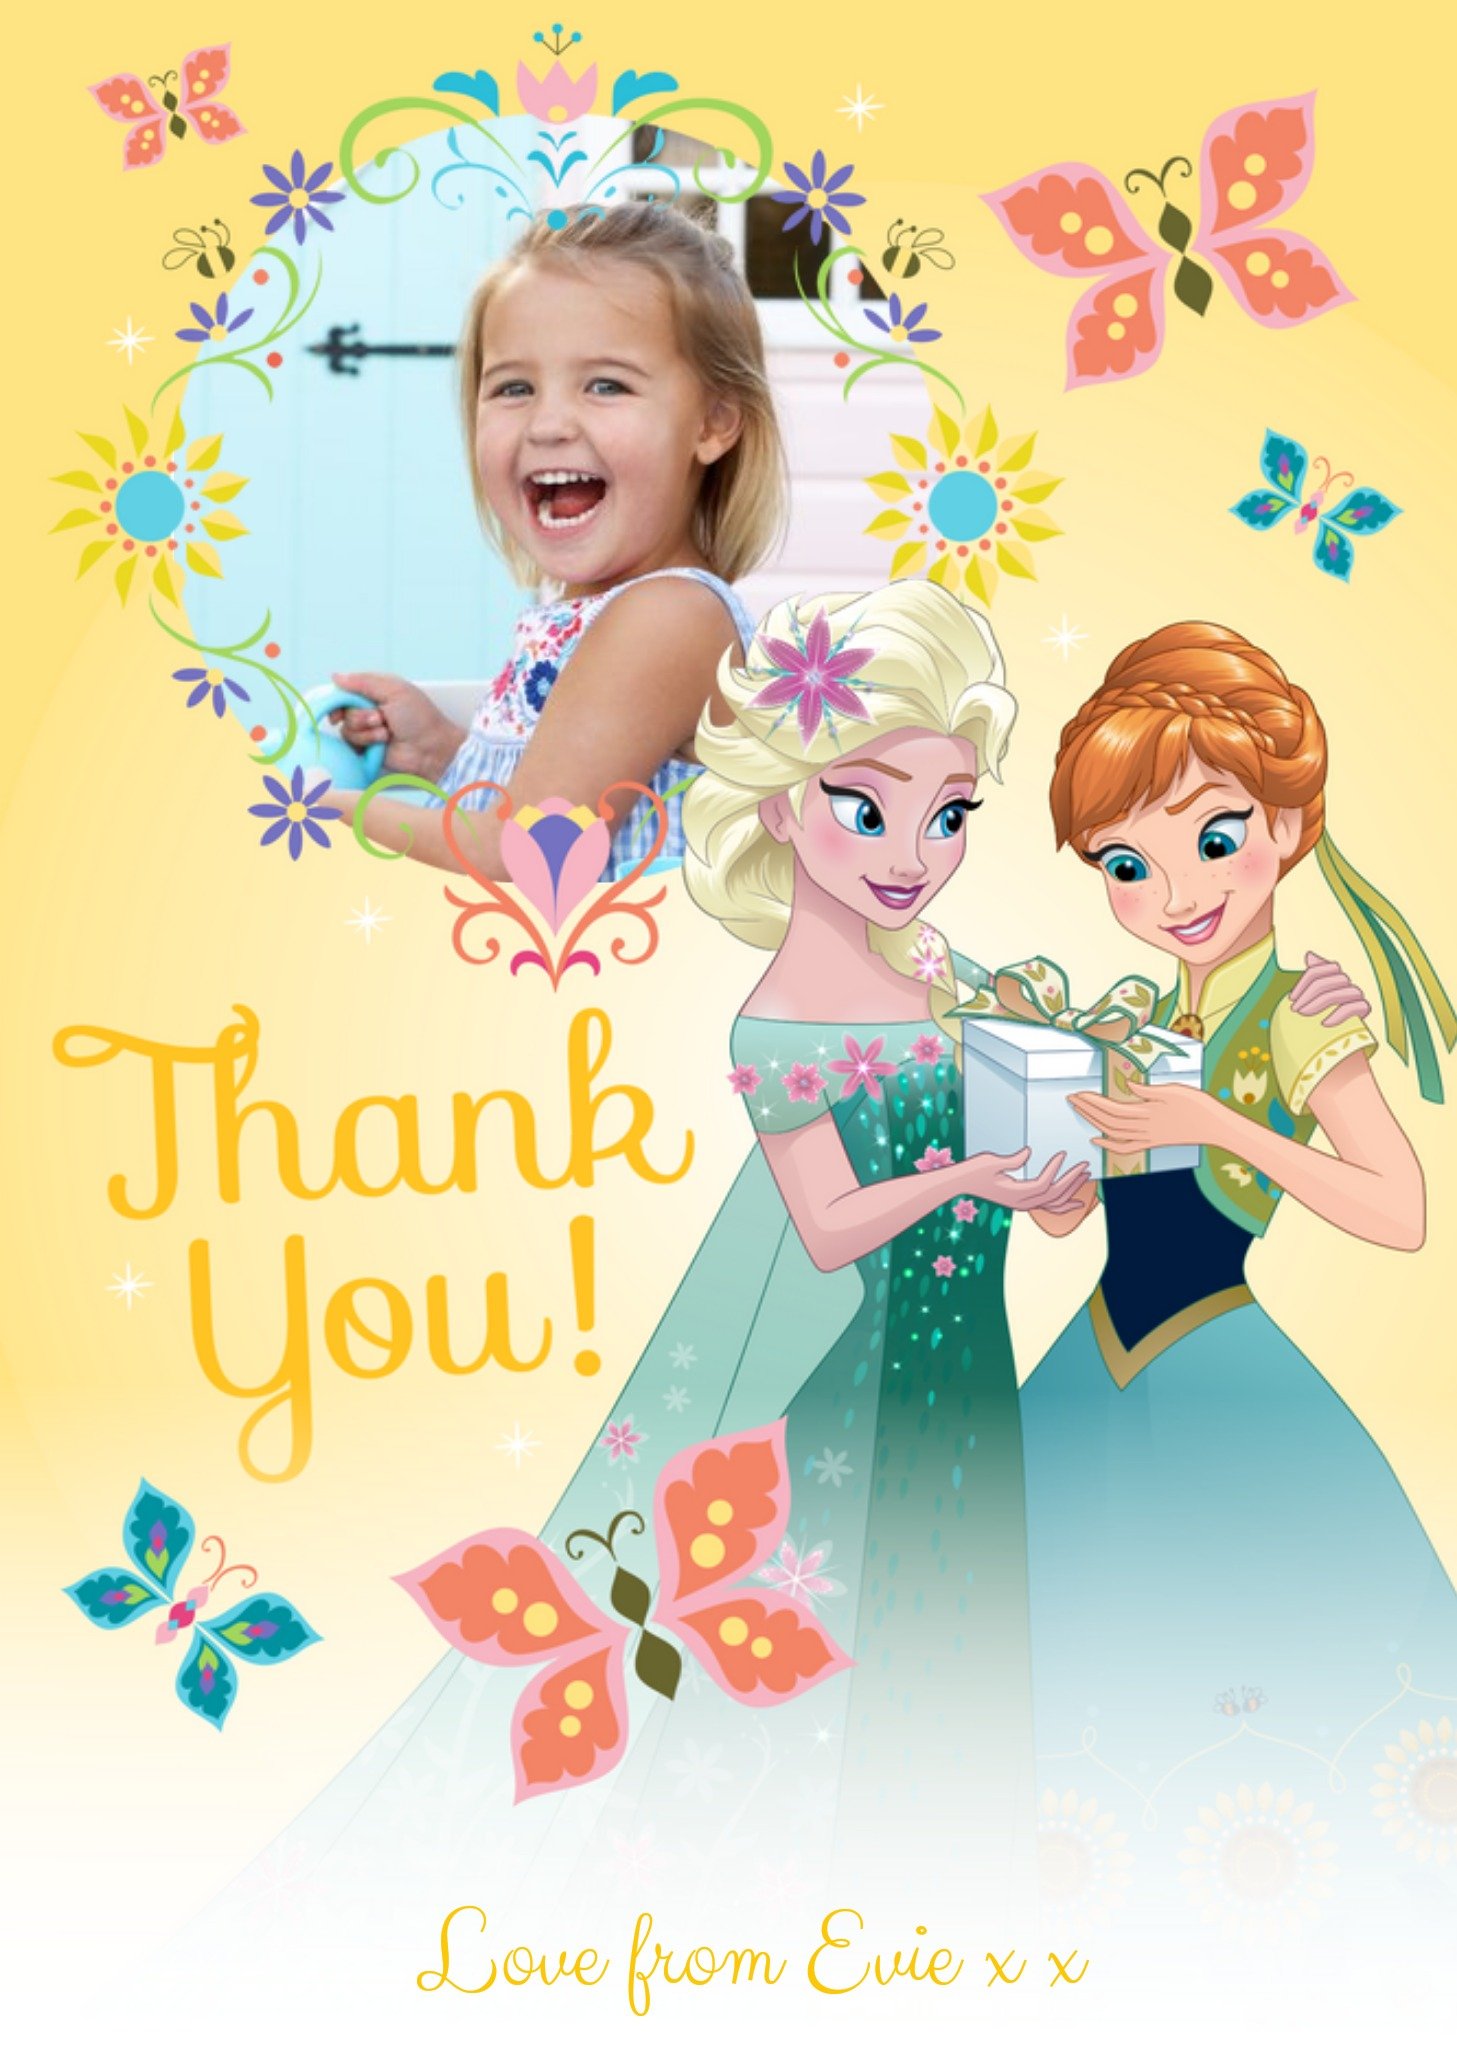 Disney Princesses Disney Anna And Elsa Personalised Photo Upload Birthday Card For Girl Ecard